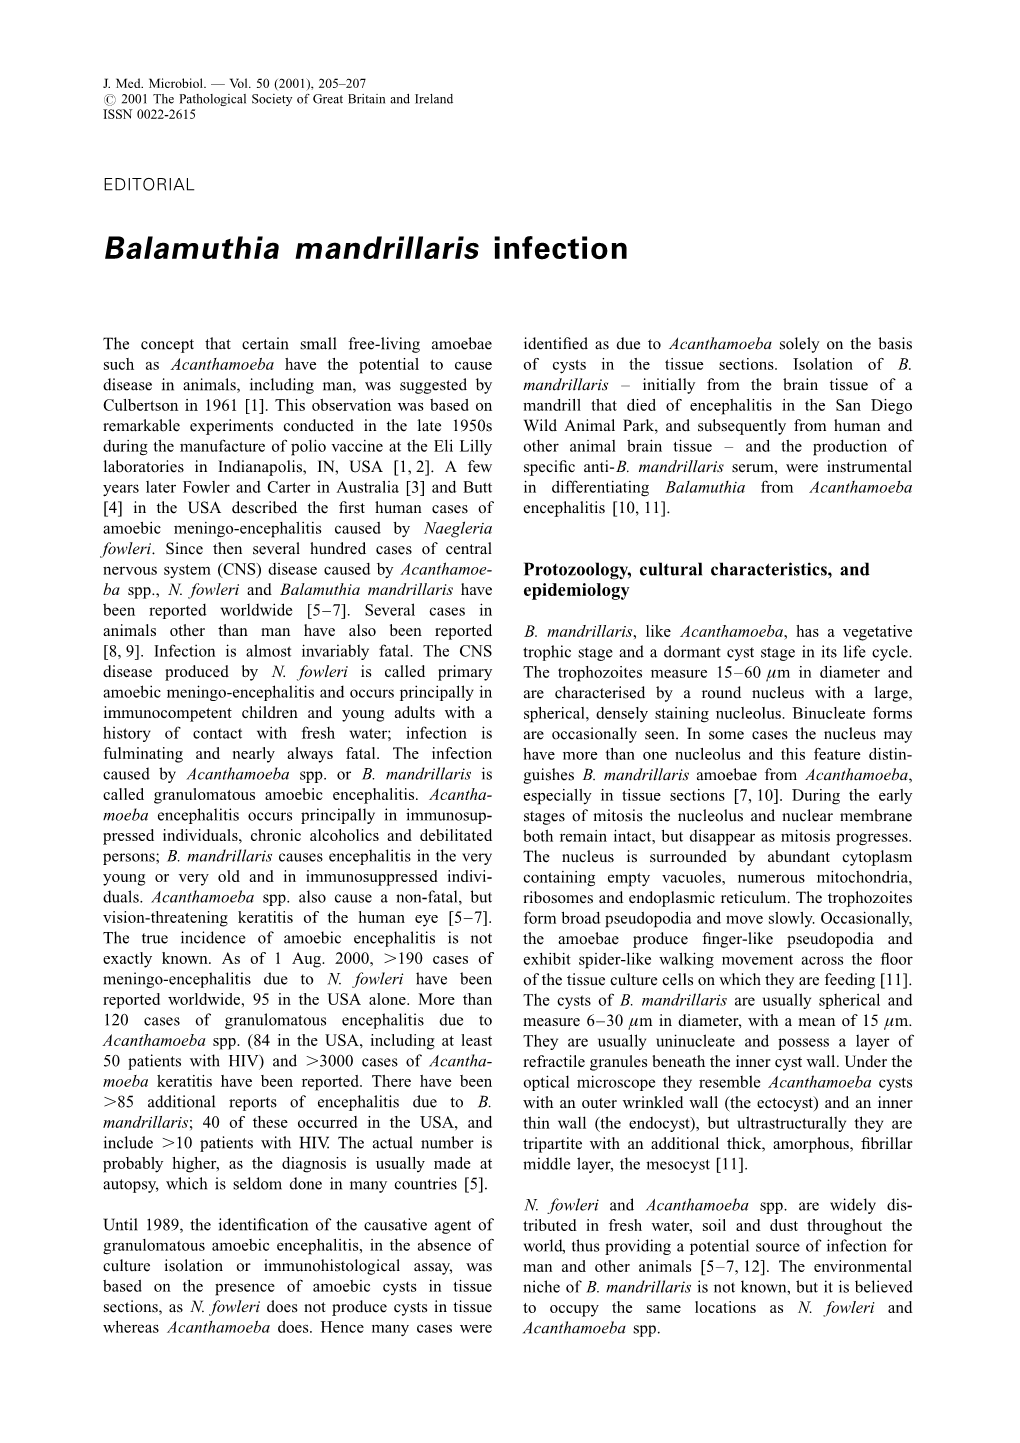 Balamuthia Mandrillaris Infection